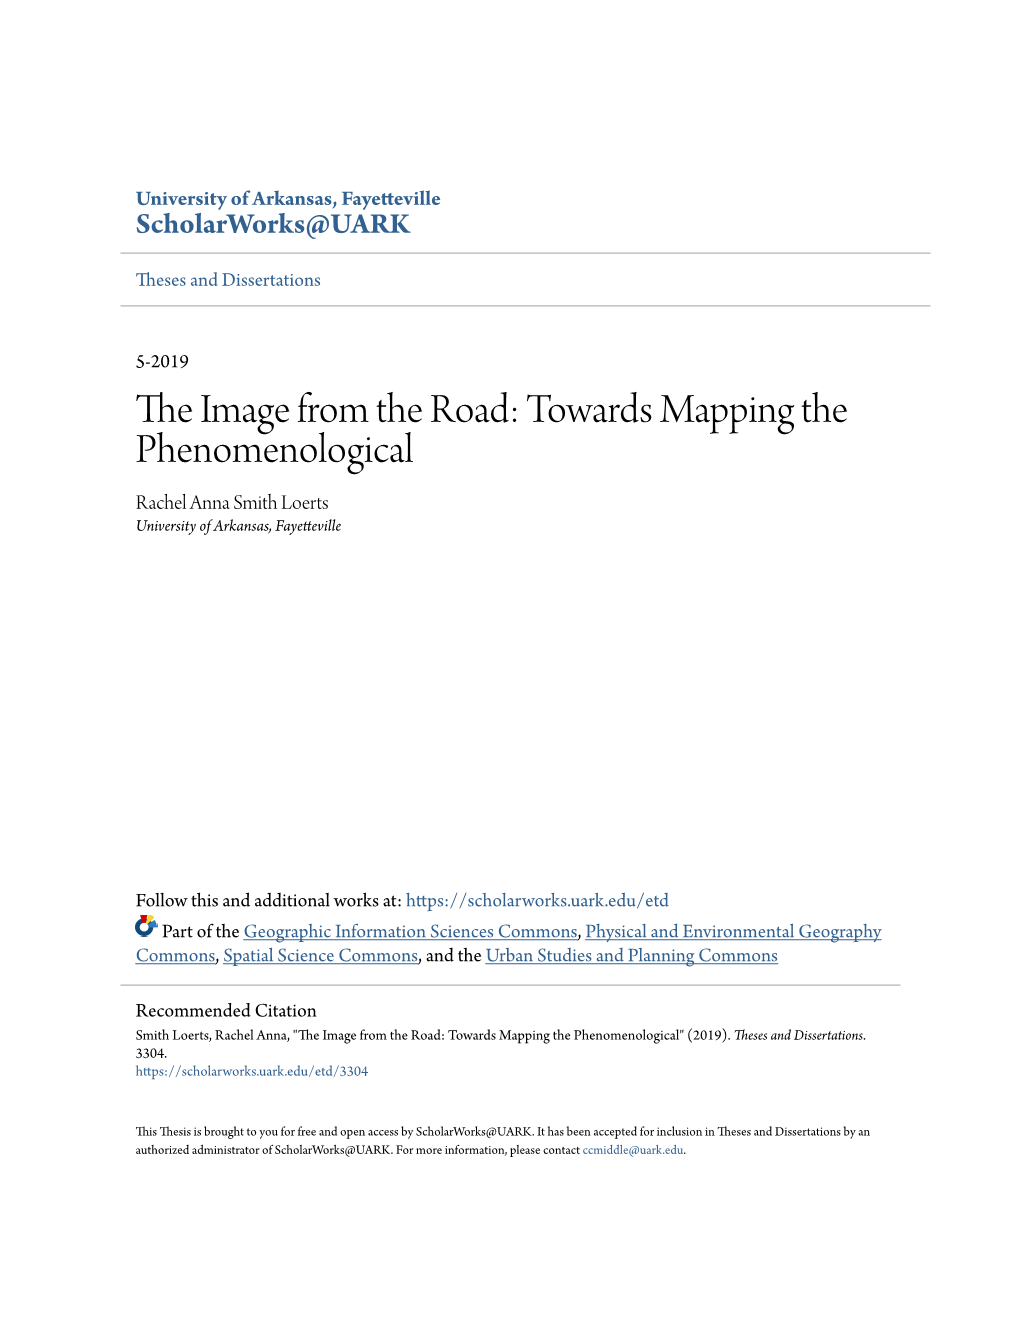 Towards Mapping the Phenomenological Rachel Anna Smith Loerts University of Arkansas, Fayetteville